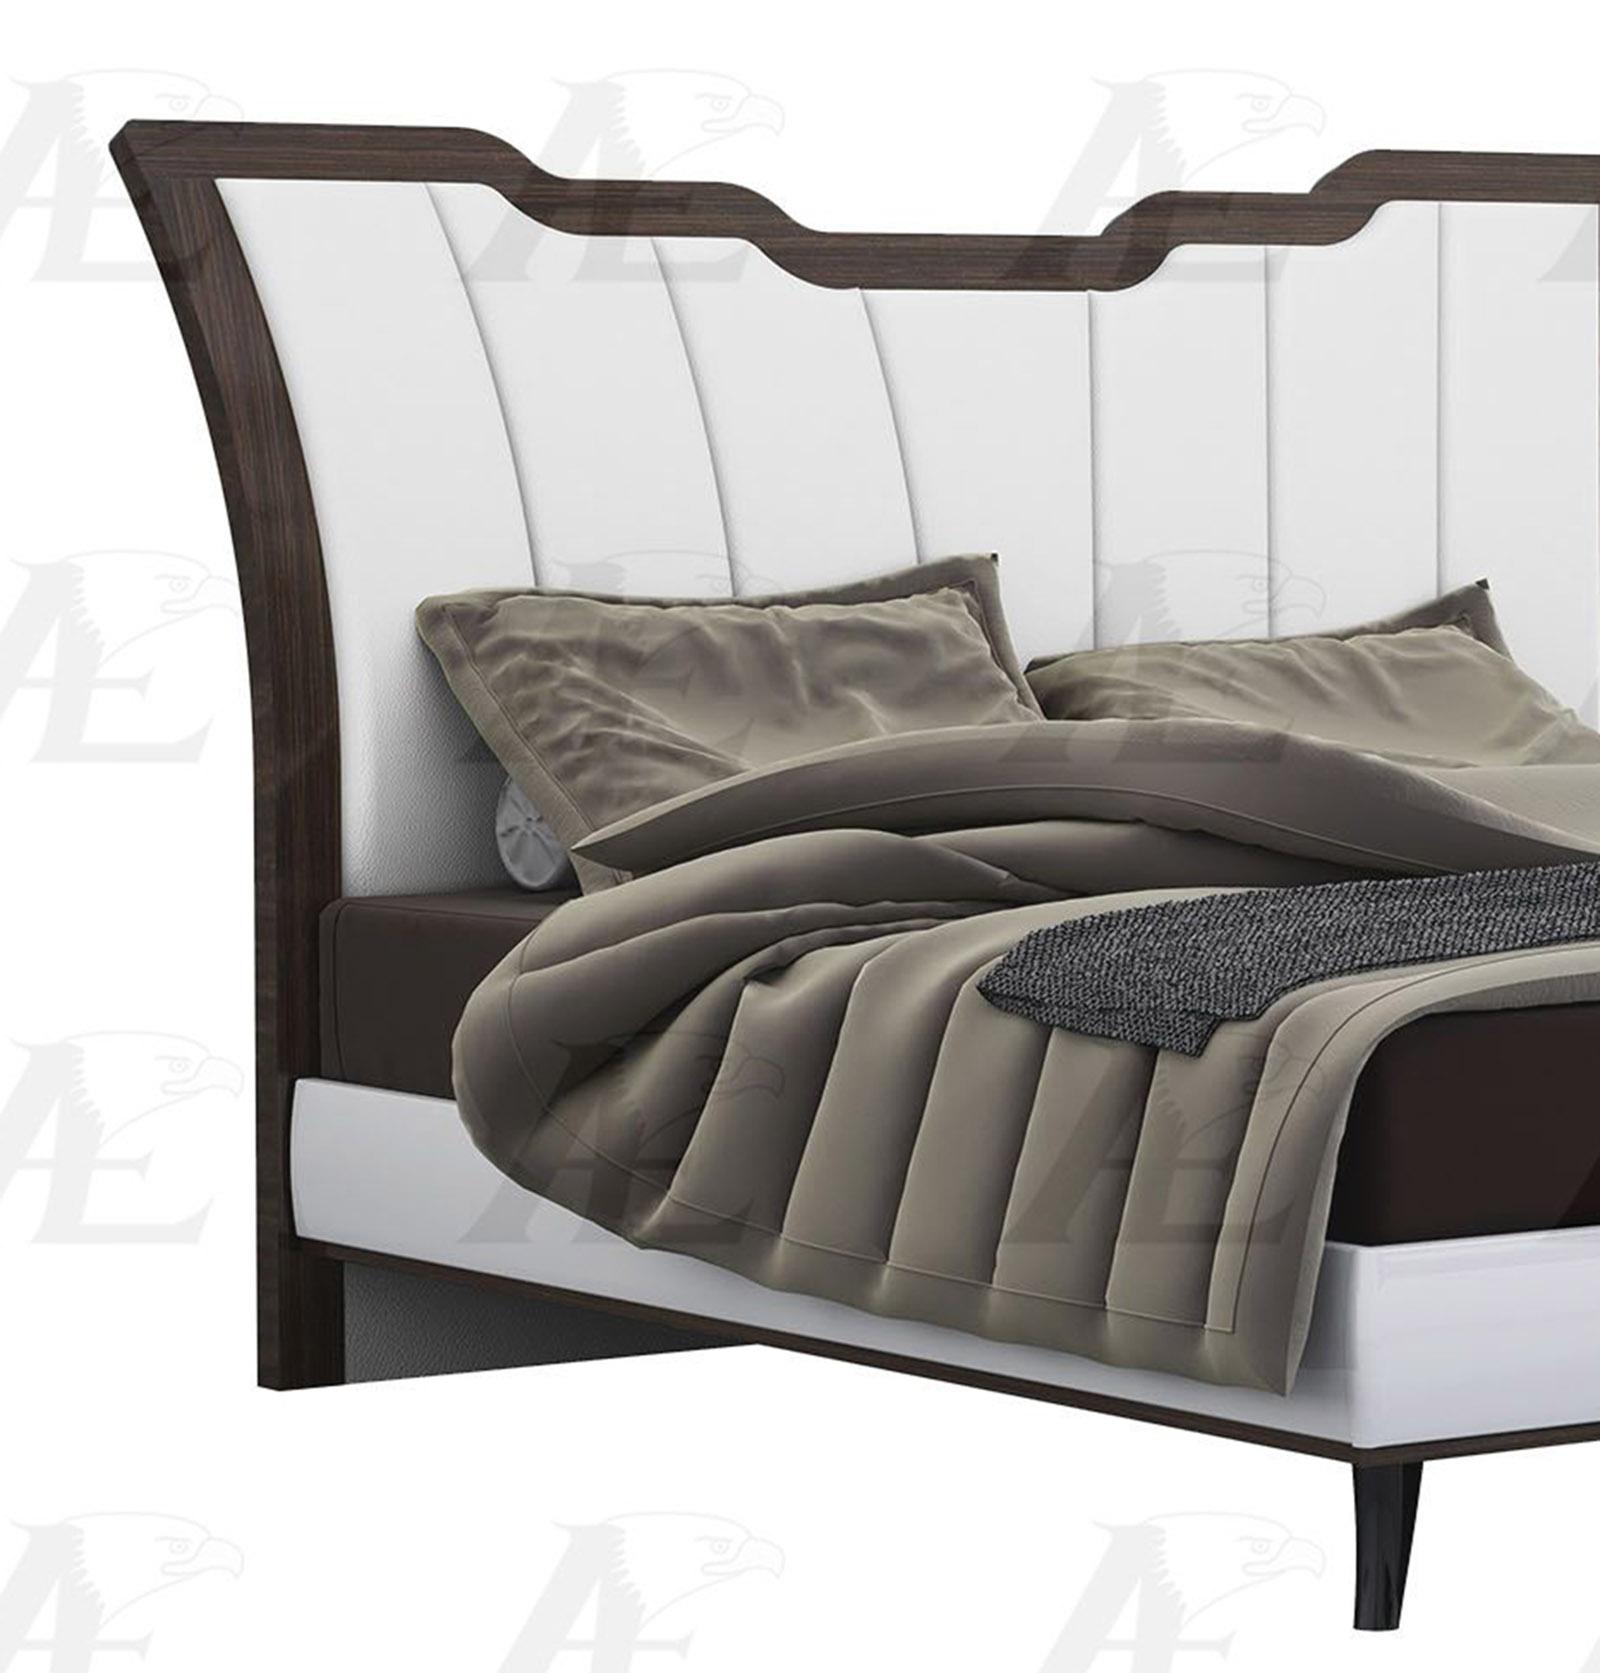 

    
American Eagle Furniture B-P105 Platform Bed Brown/White AE B-P105-EK
